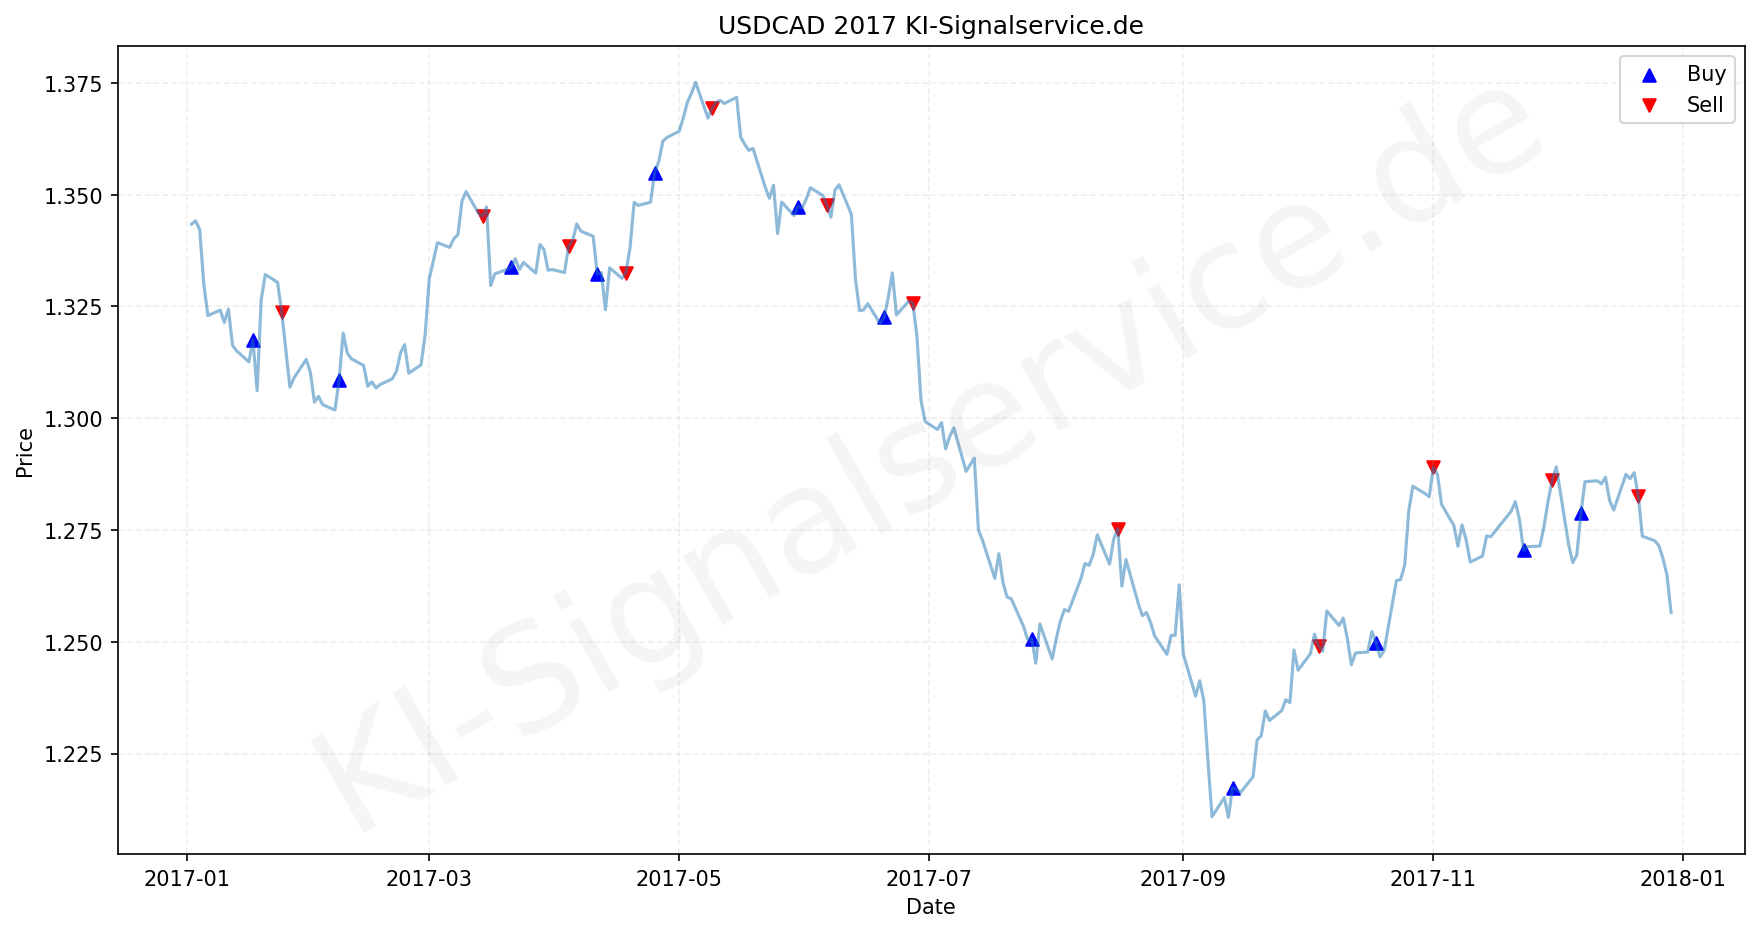 USDCAD Chart - KI Tradingsignale 2017